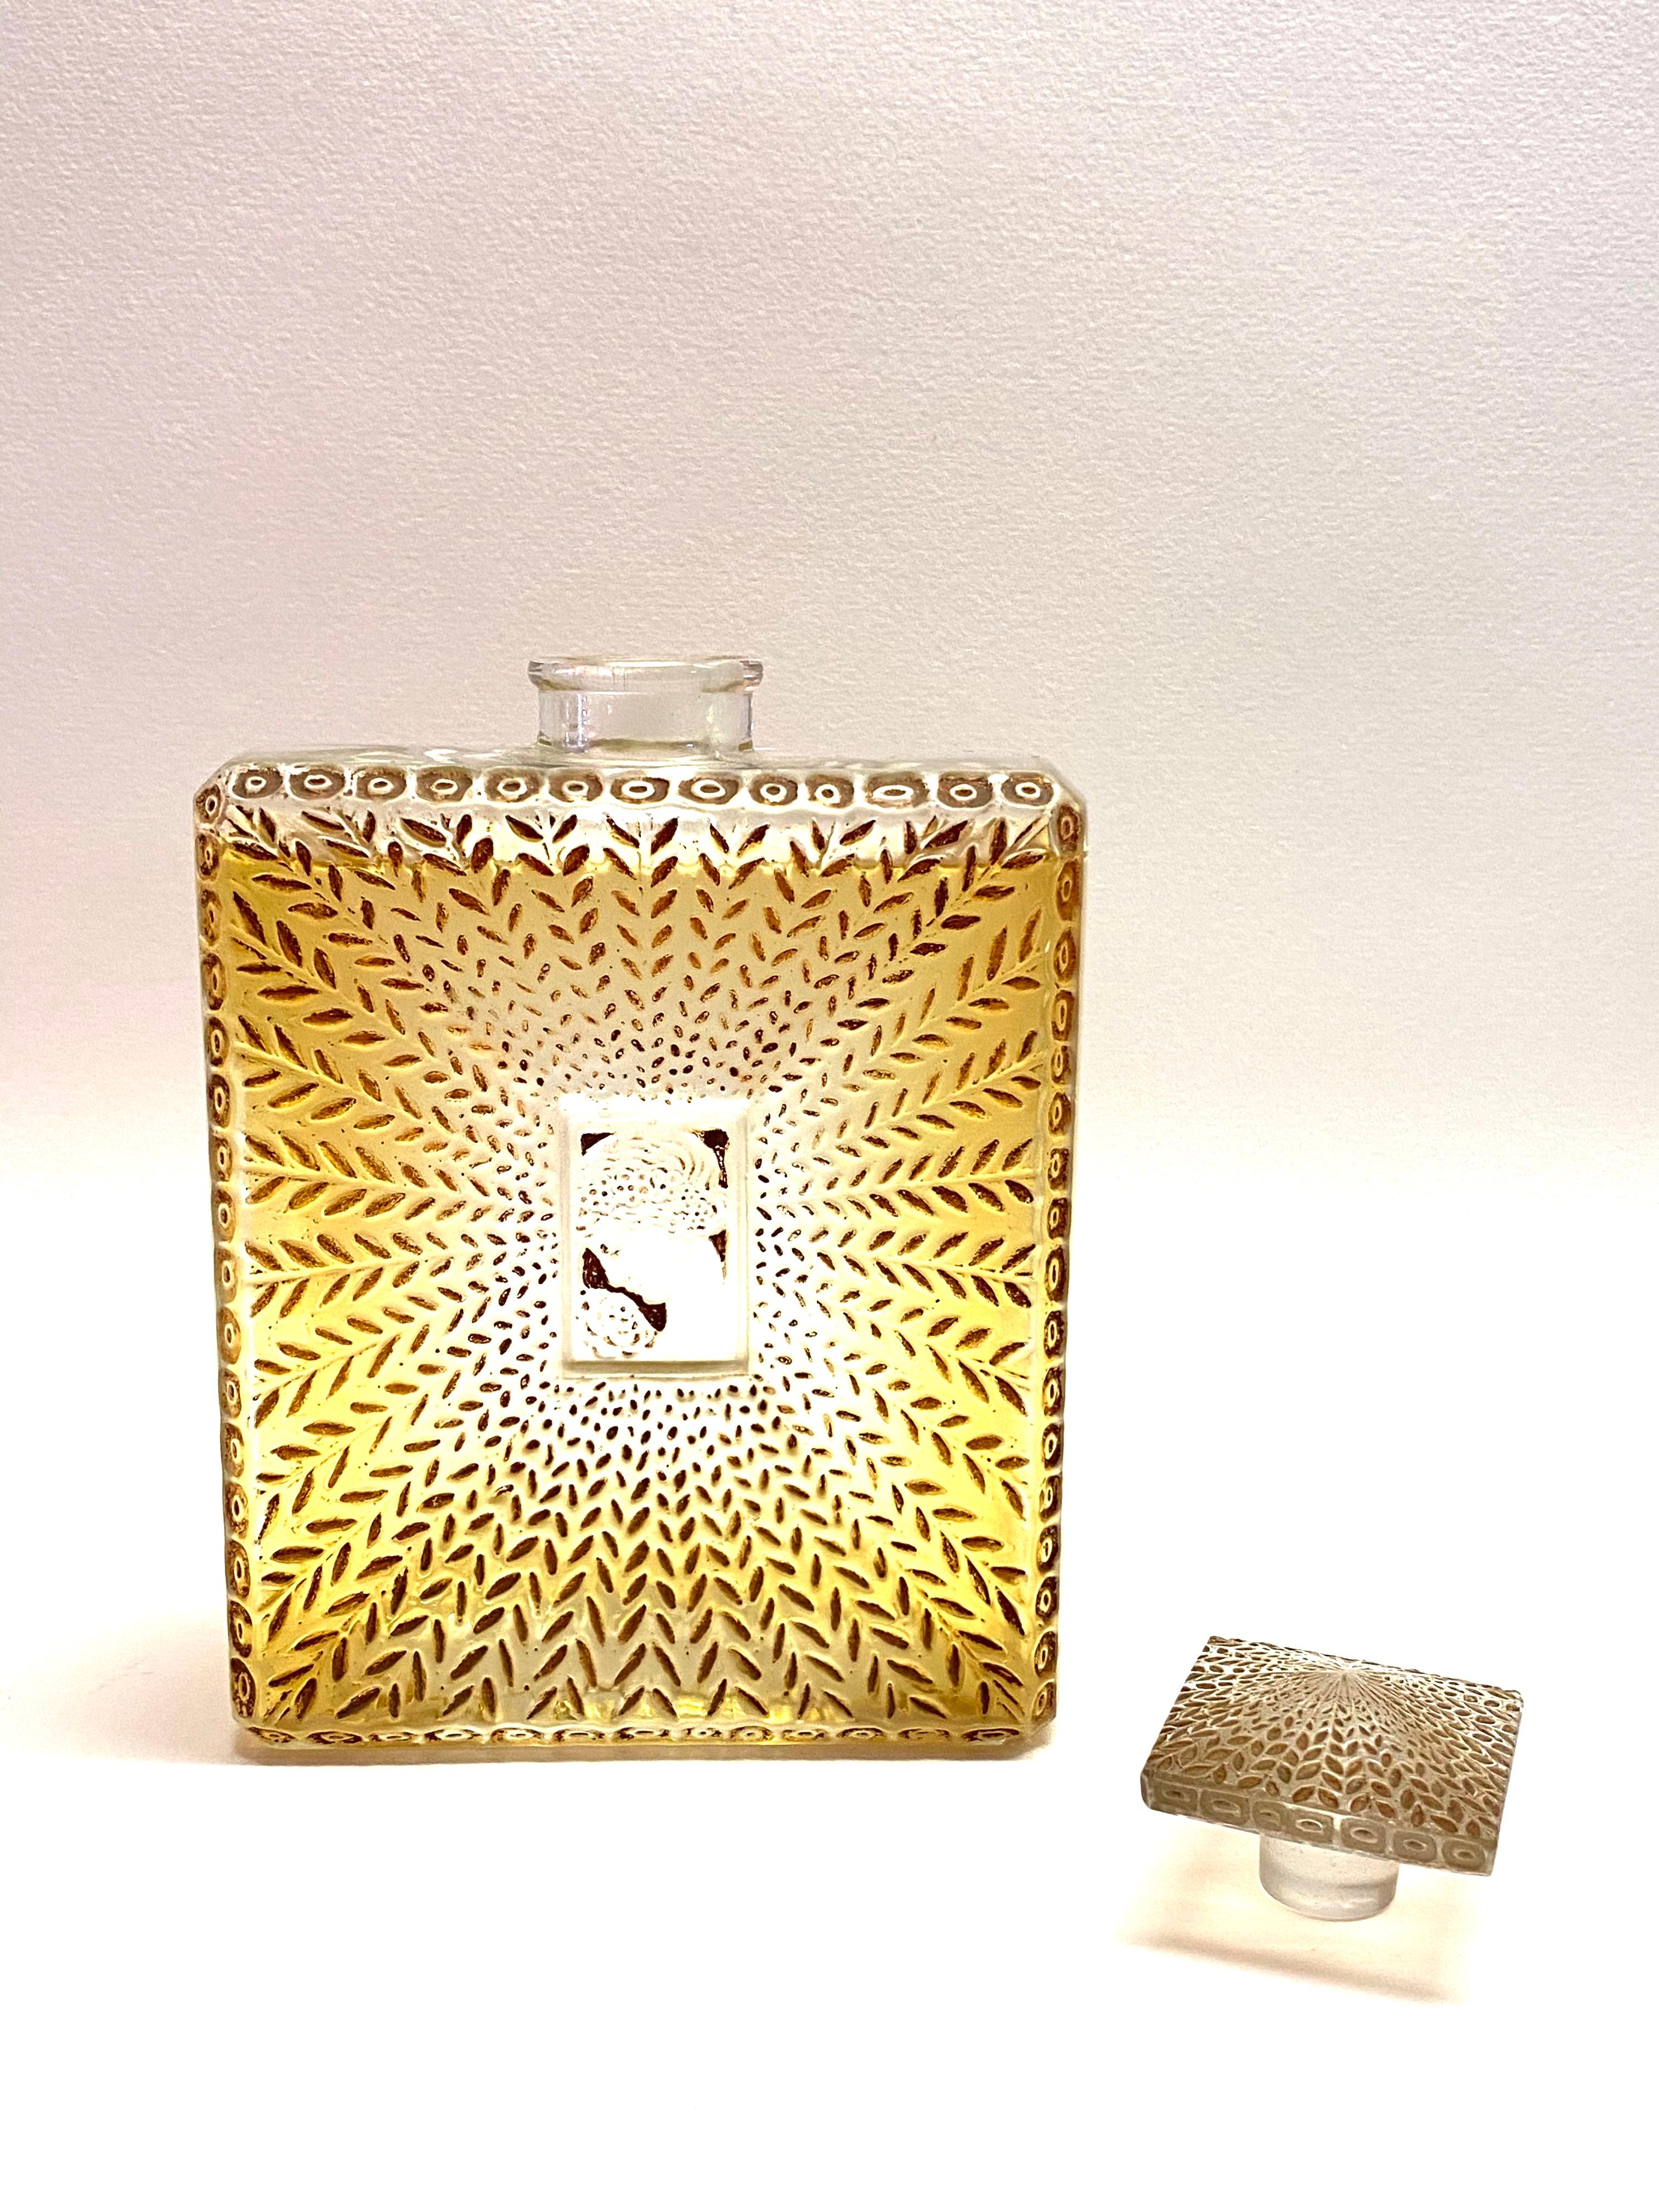 Molded 1925 Rene Lalique La Belle Saison Houbigant Perfume Bottle Sepia Stained Glass